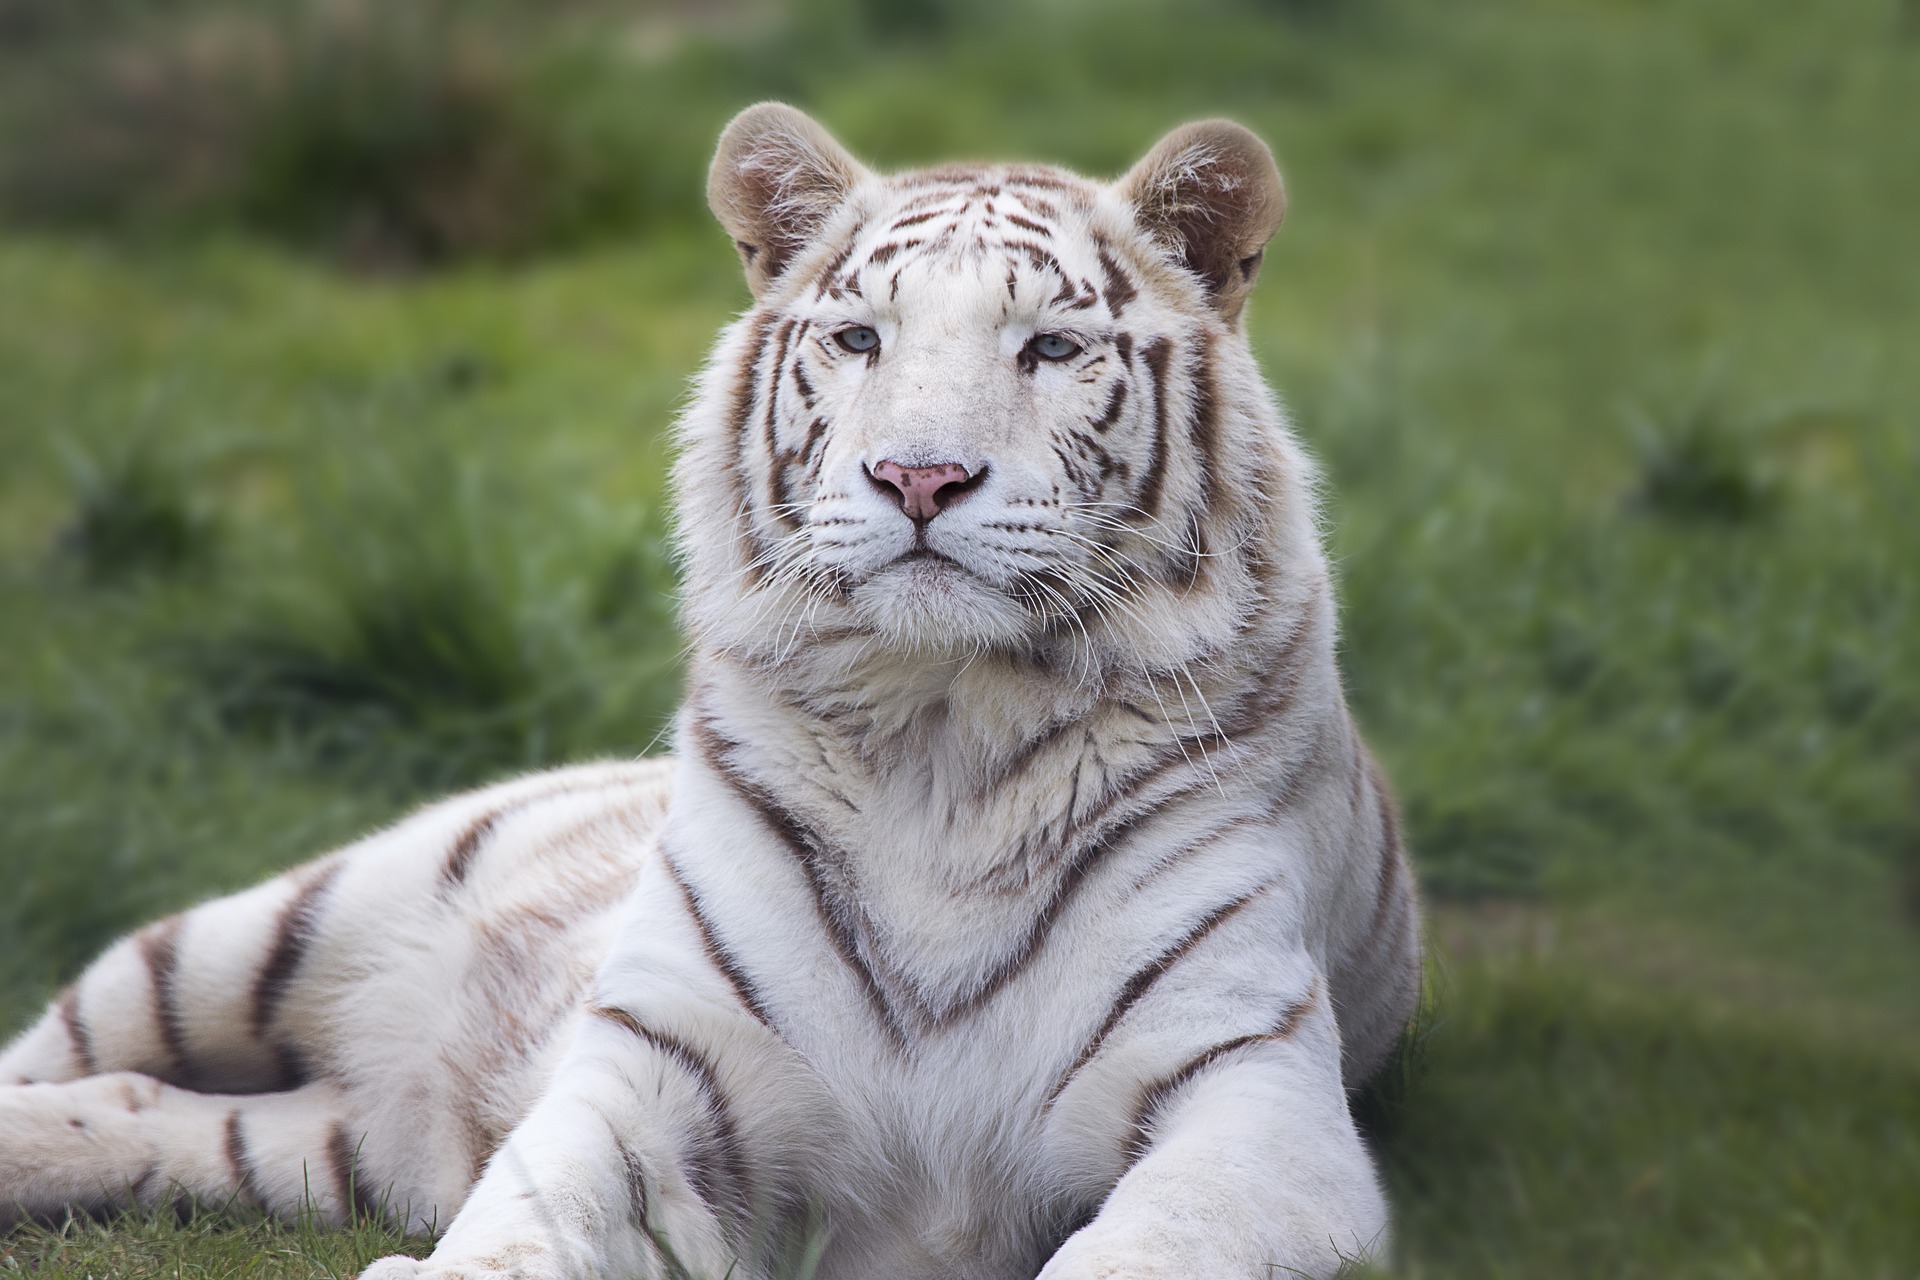 A white Bengal Tiger